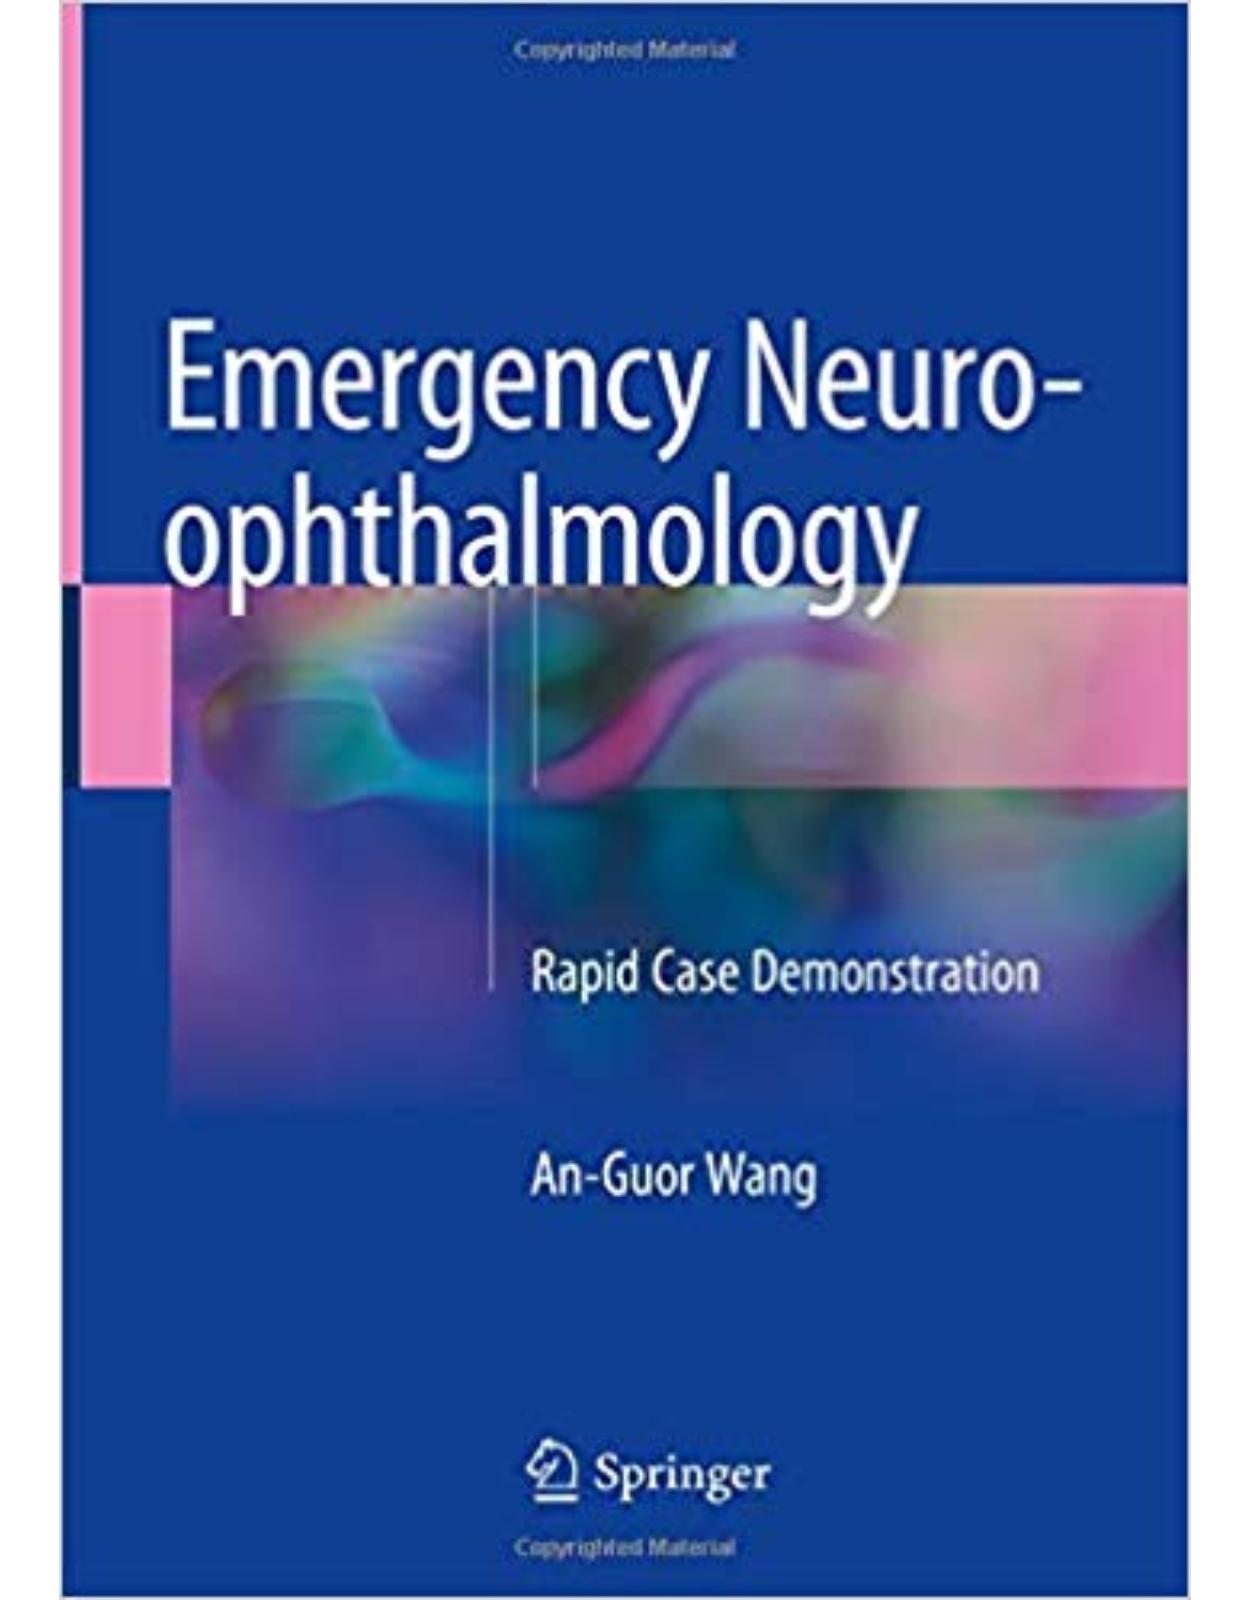 Emergency Neuro-ophthalmology: Rapid Case Demonstration